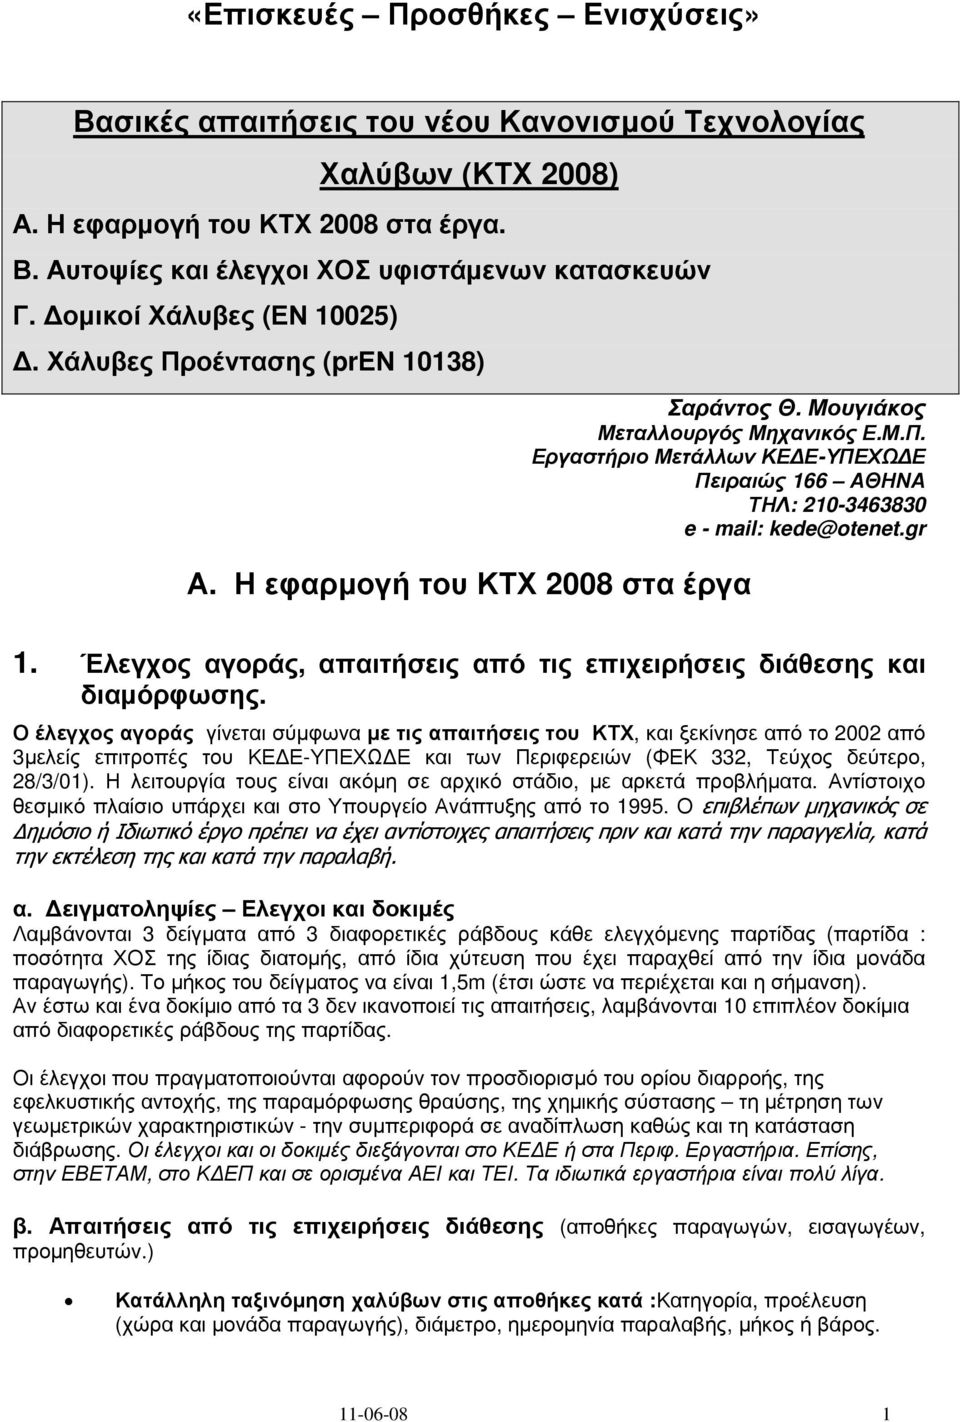 gr Α. Η εφαρµογή του ΚΤΧ 2008 στα έργα 1. Έλεγχος αγοράς, απαιτήσεις από τις επιχειρήσεις διάθεσης και διαµόρφωσης.